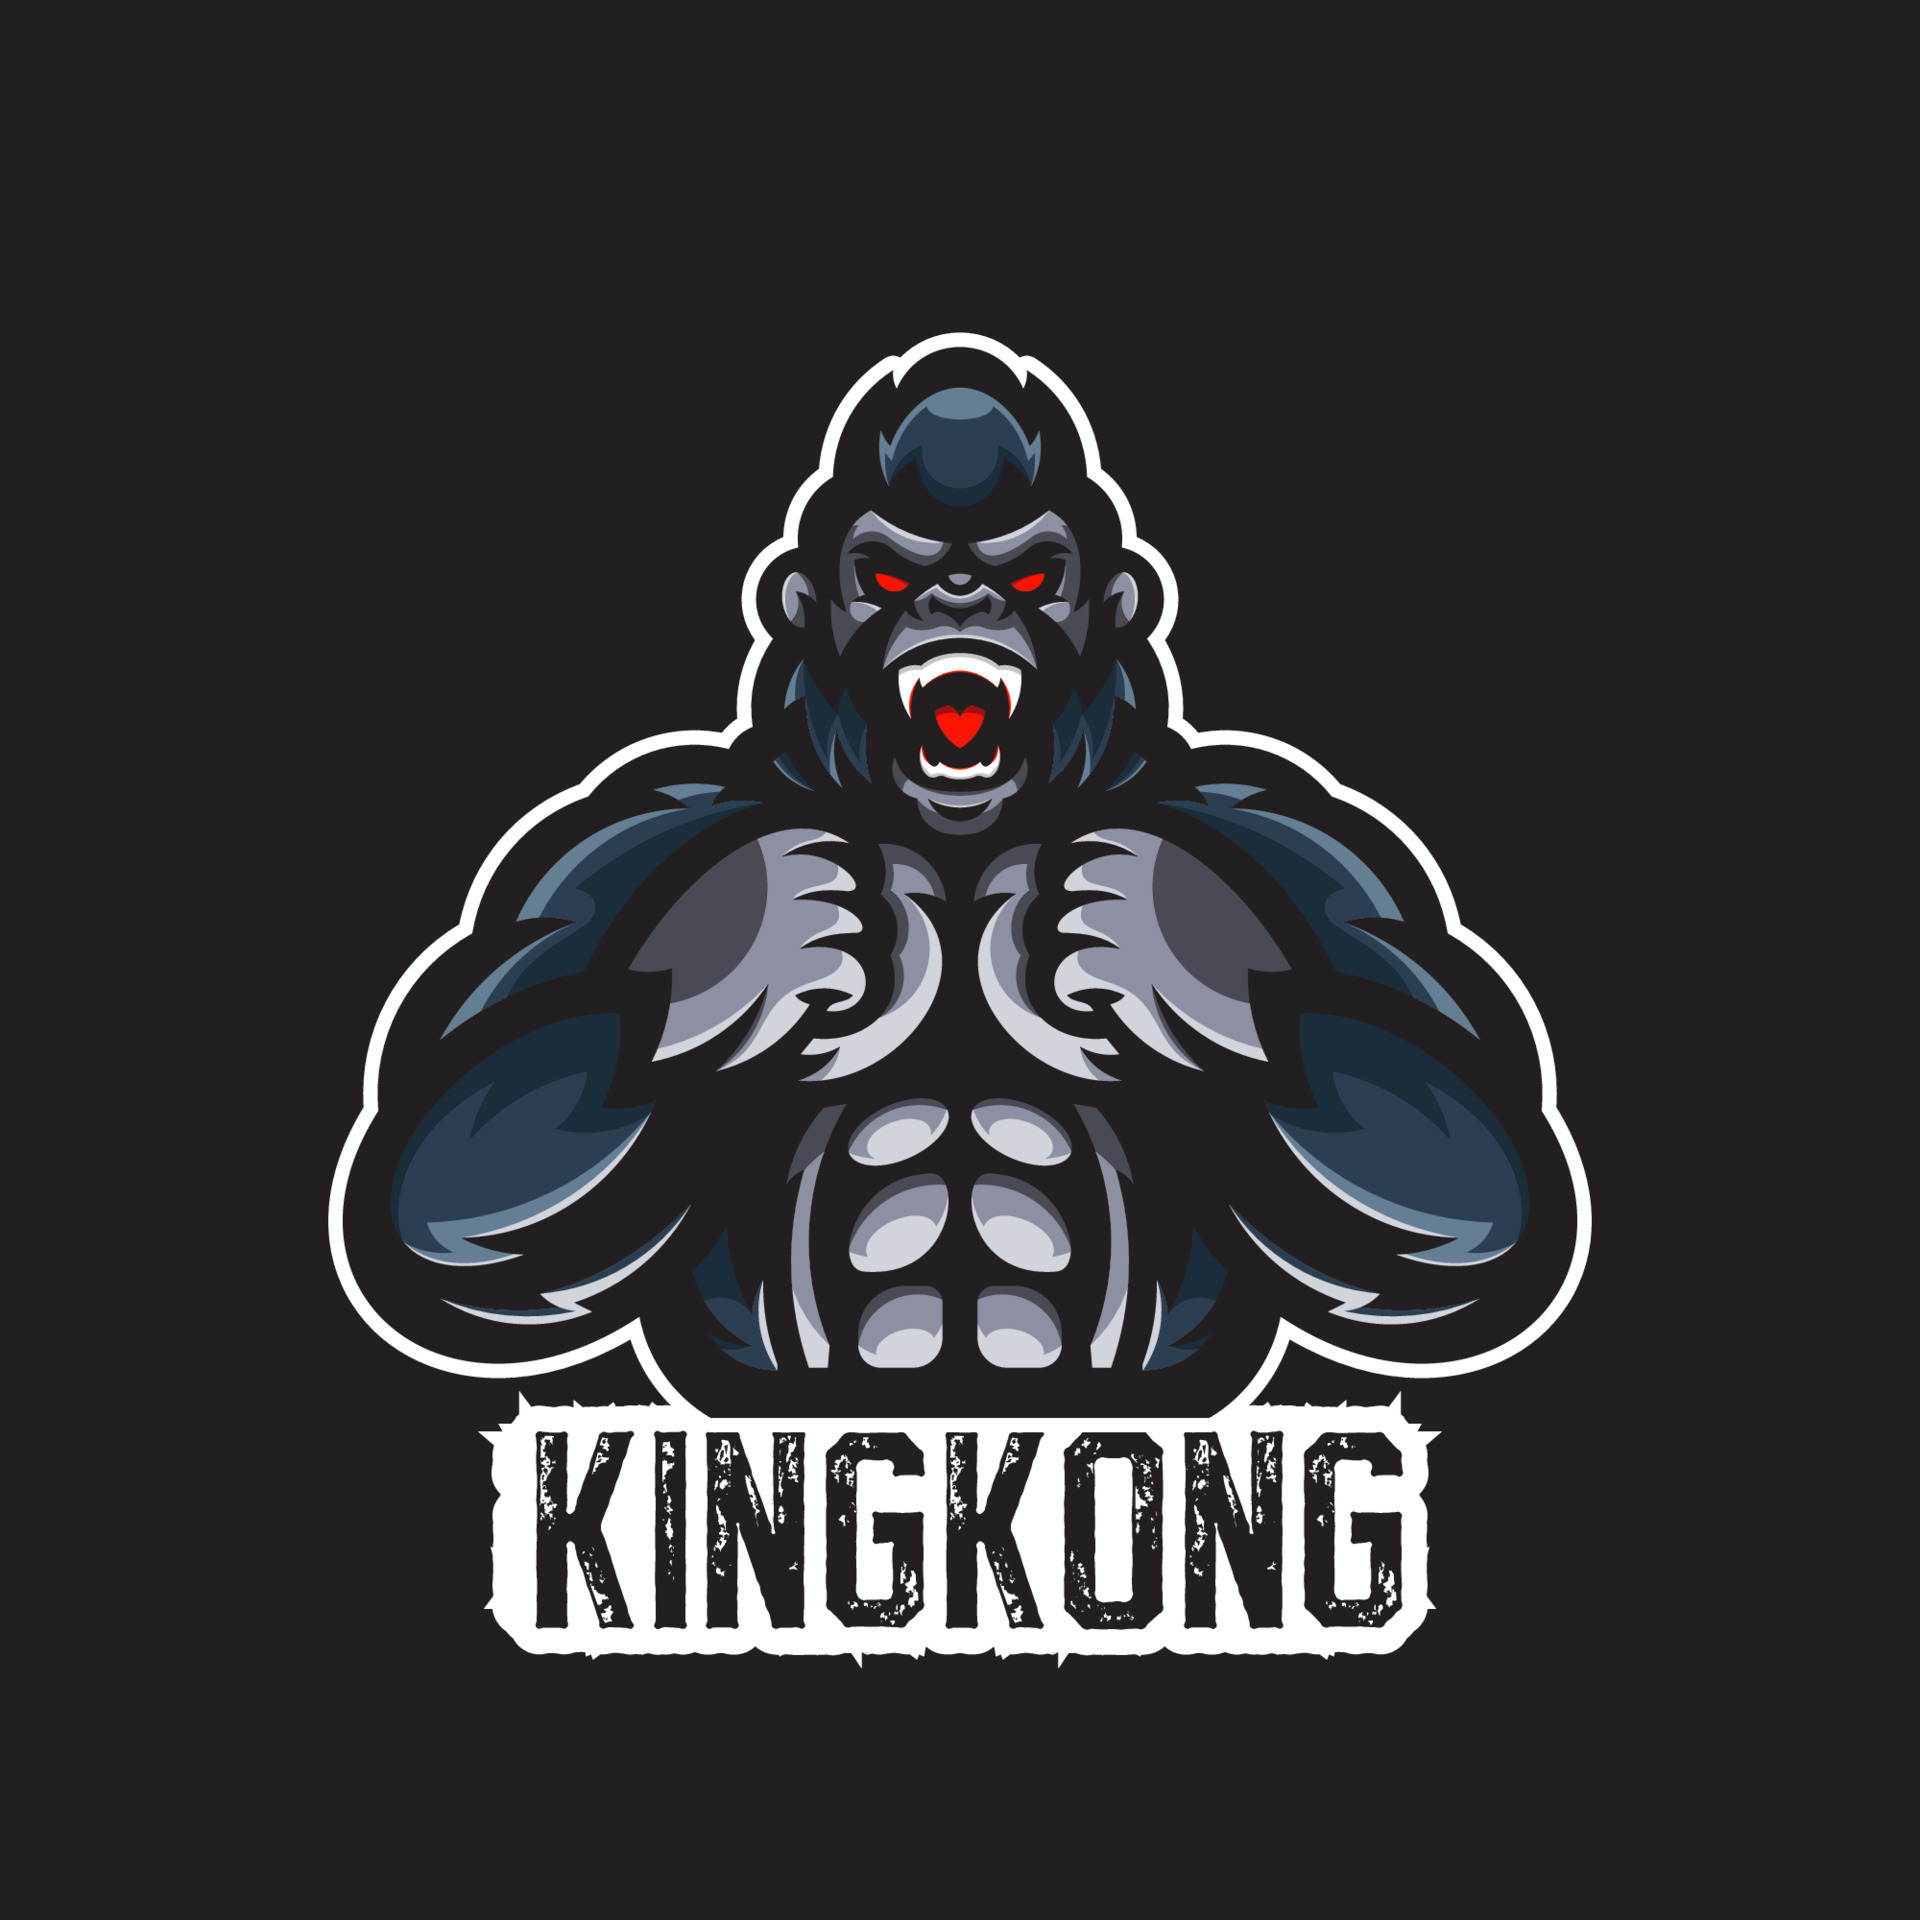 23 Kong league Vector Images | Depositphotos